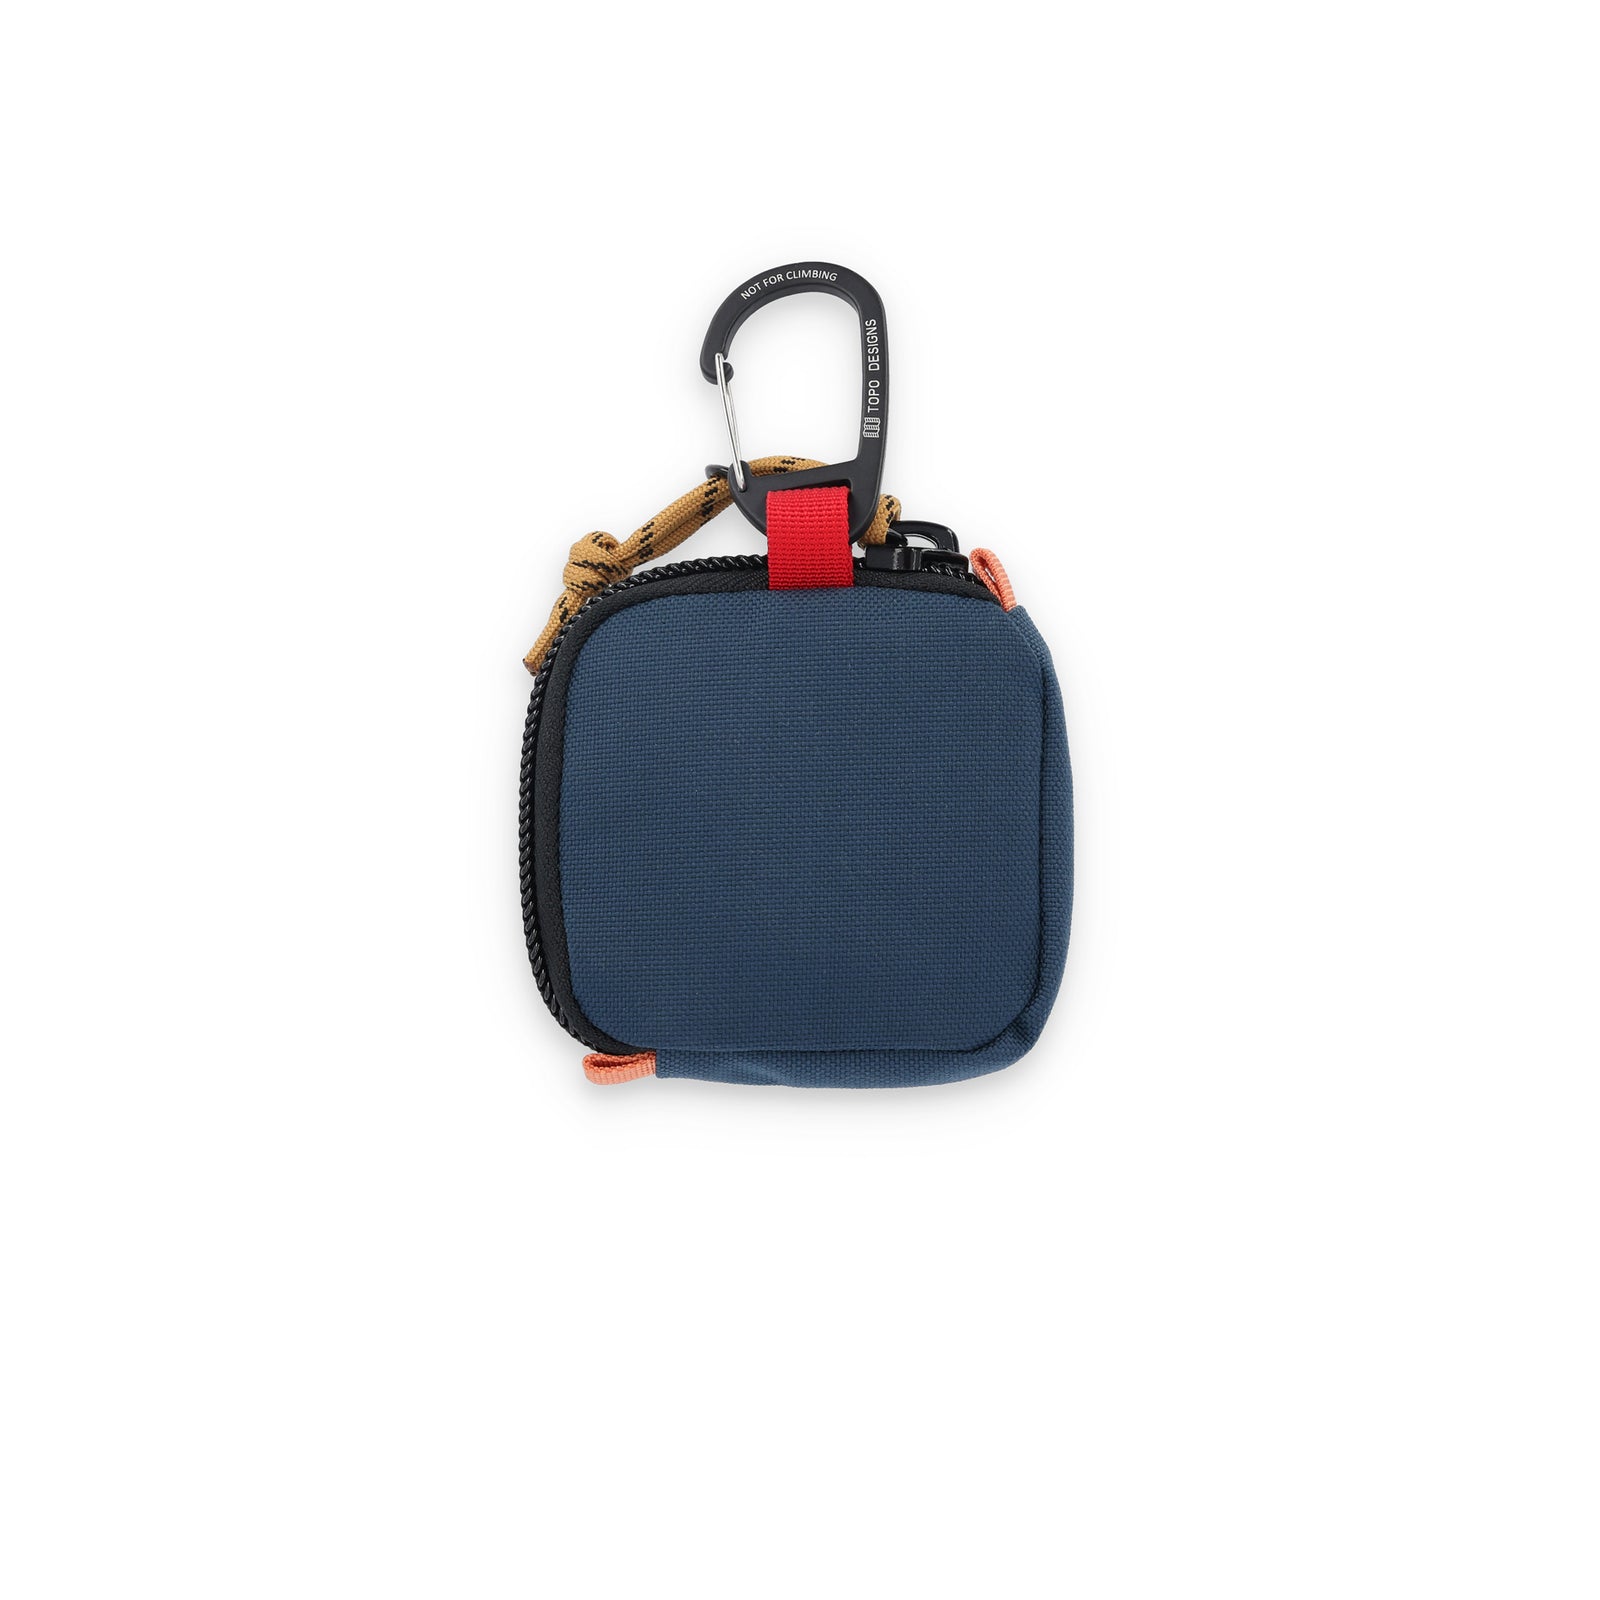 Back of Topo Designs Square Bag carabiner clip keychain wallet in "Pond Blue" nylon.